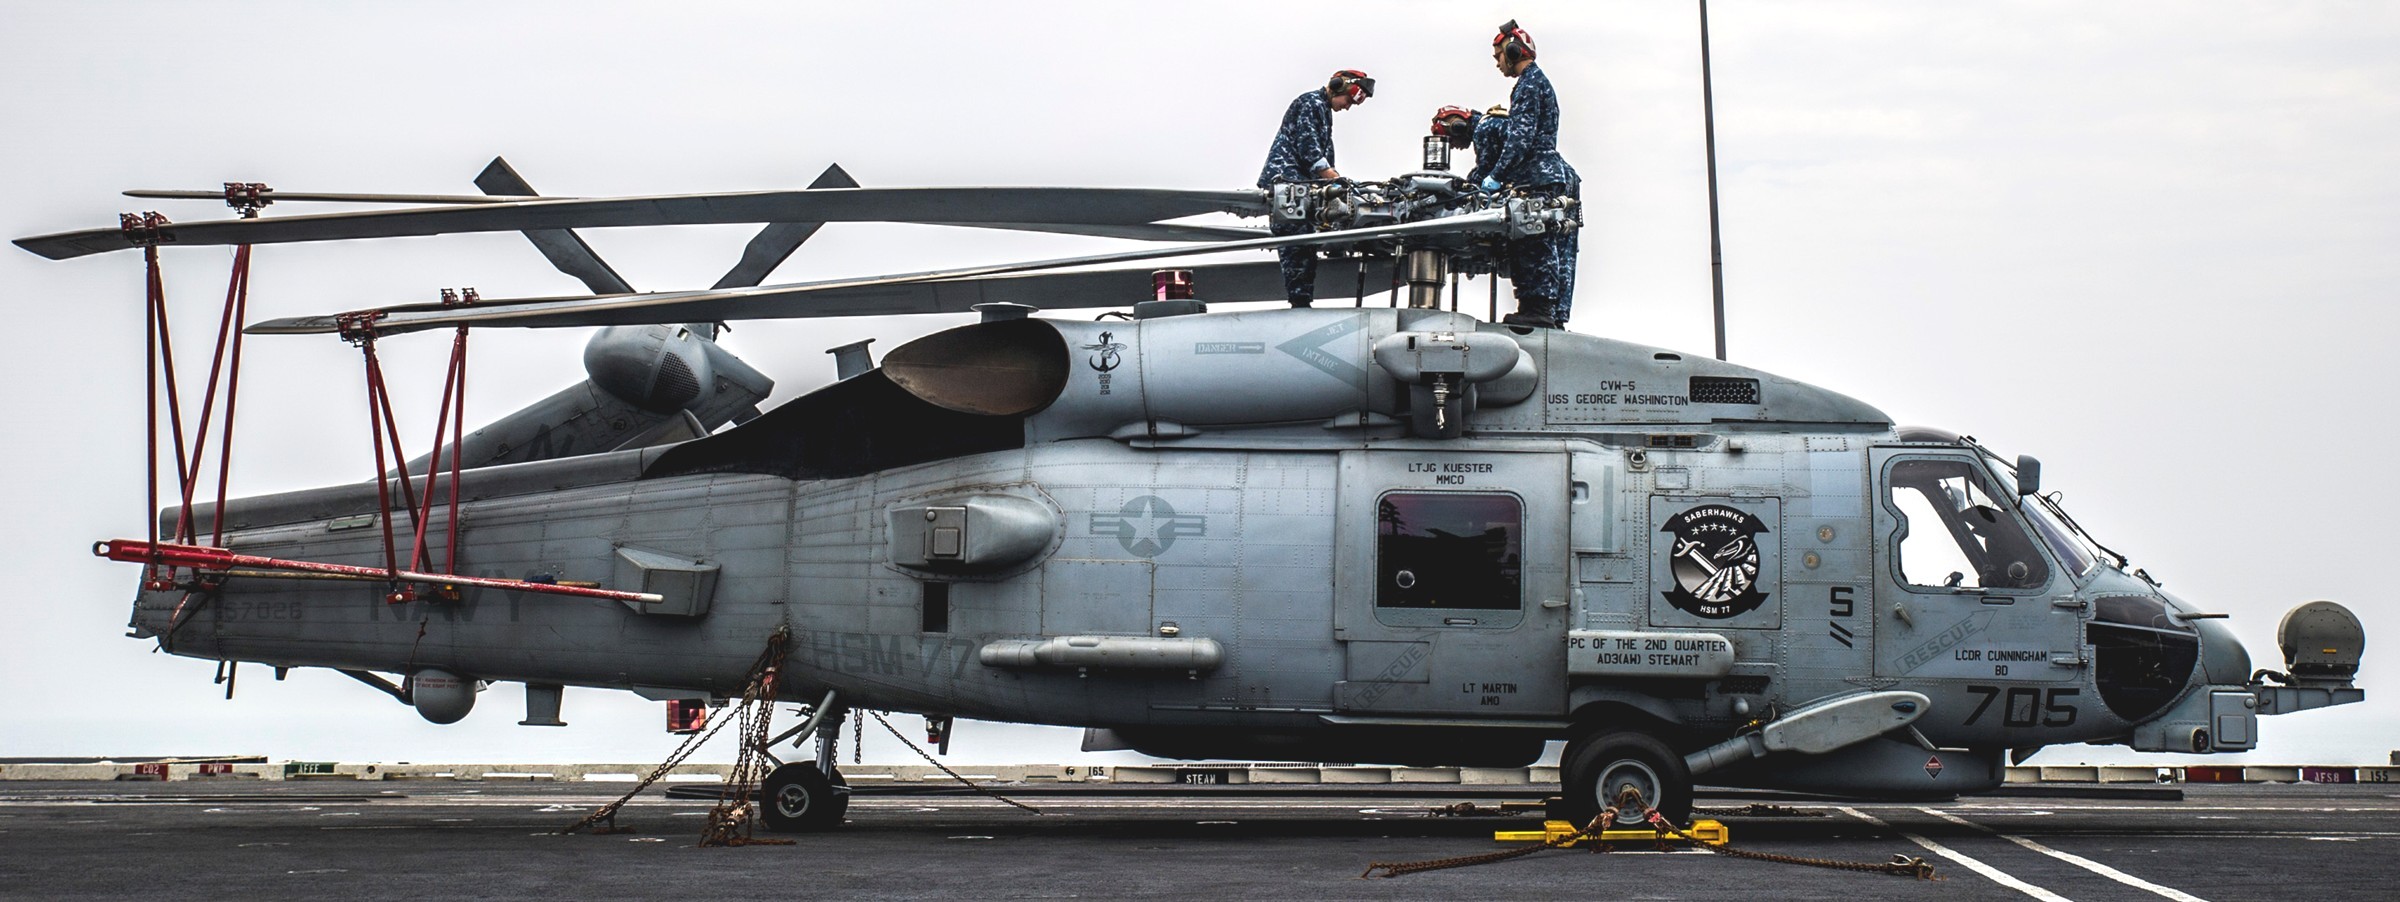 hsm-77 saberhawks helicopter maritime strike squadron mh-60r seahawk cvw-5 cvn-73 uss george washington 2014 15